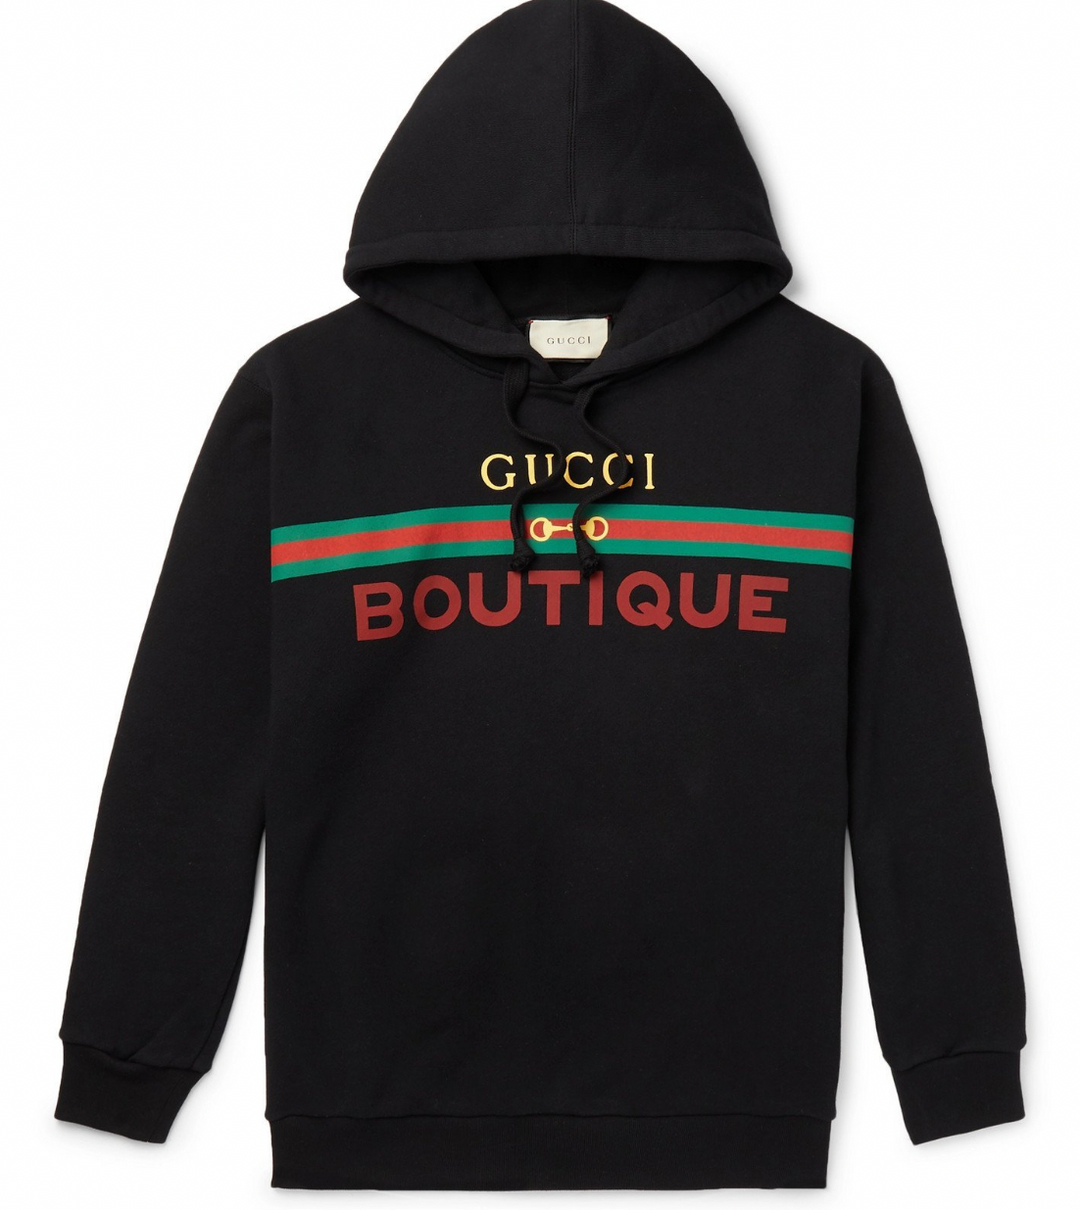 Gucci 'Boutique' Black Hoodie